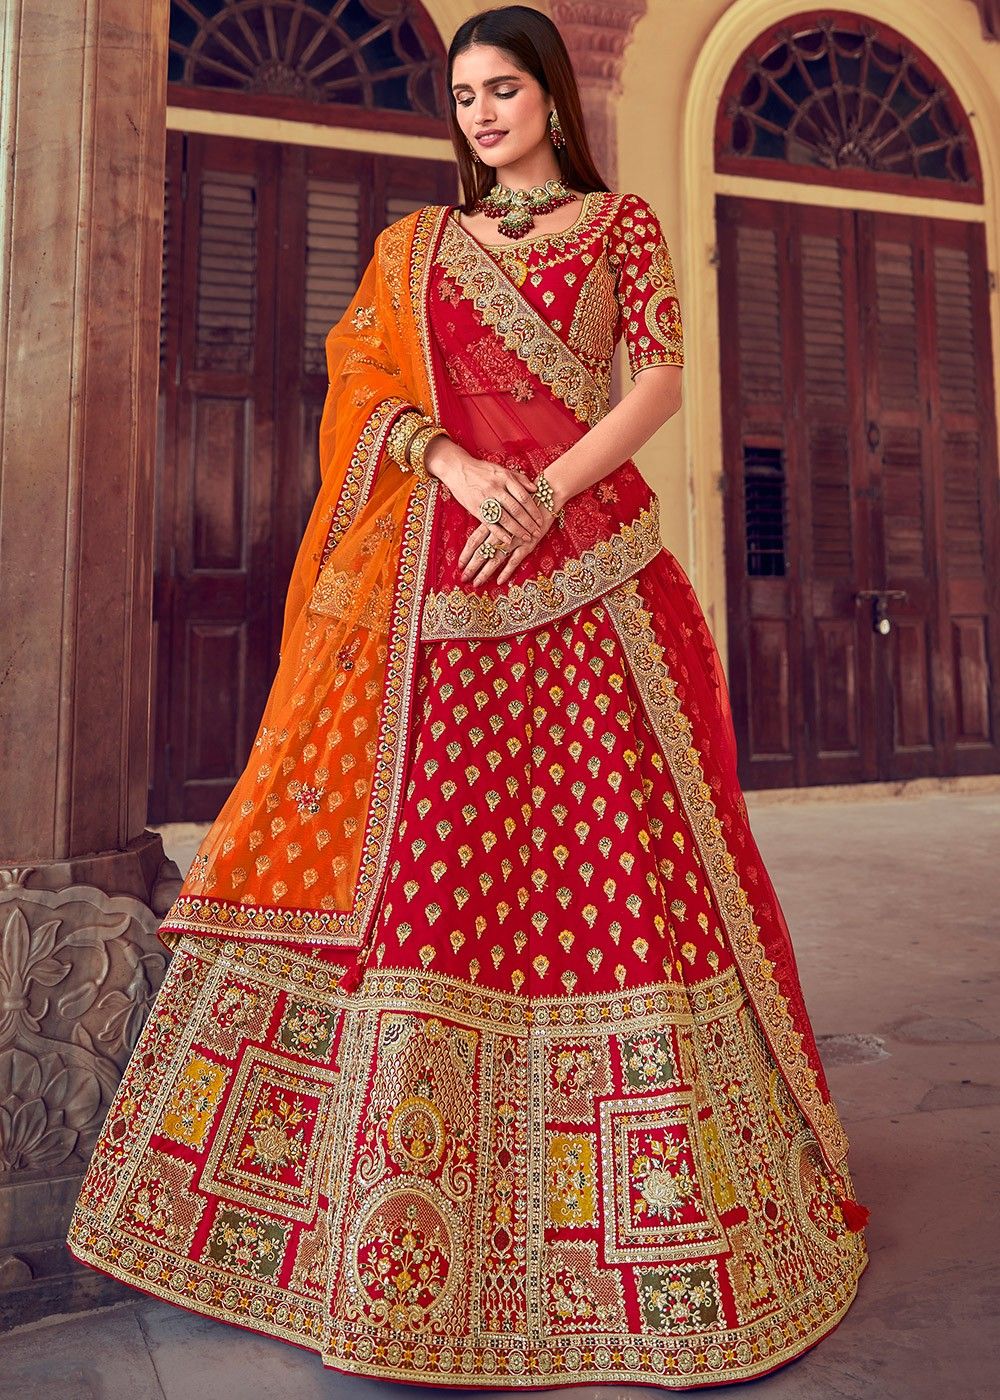 Embroidered Designer Red Indian Bridal Lehenga #BN1223 - CUSTOM SIZE | Red  bridal dress, Red bridal lehenga pakistani, Indian wedding dress red